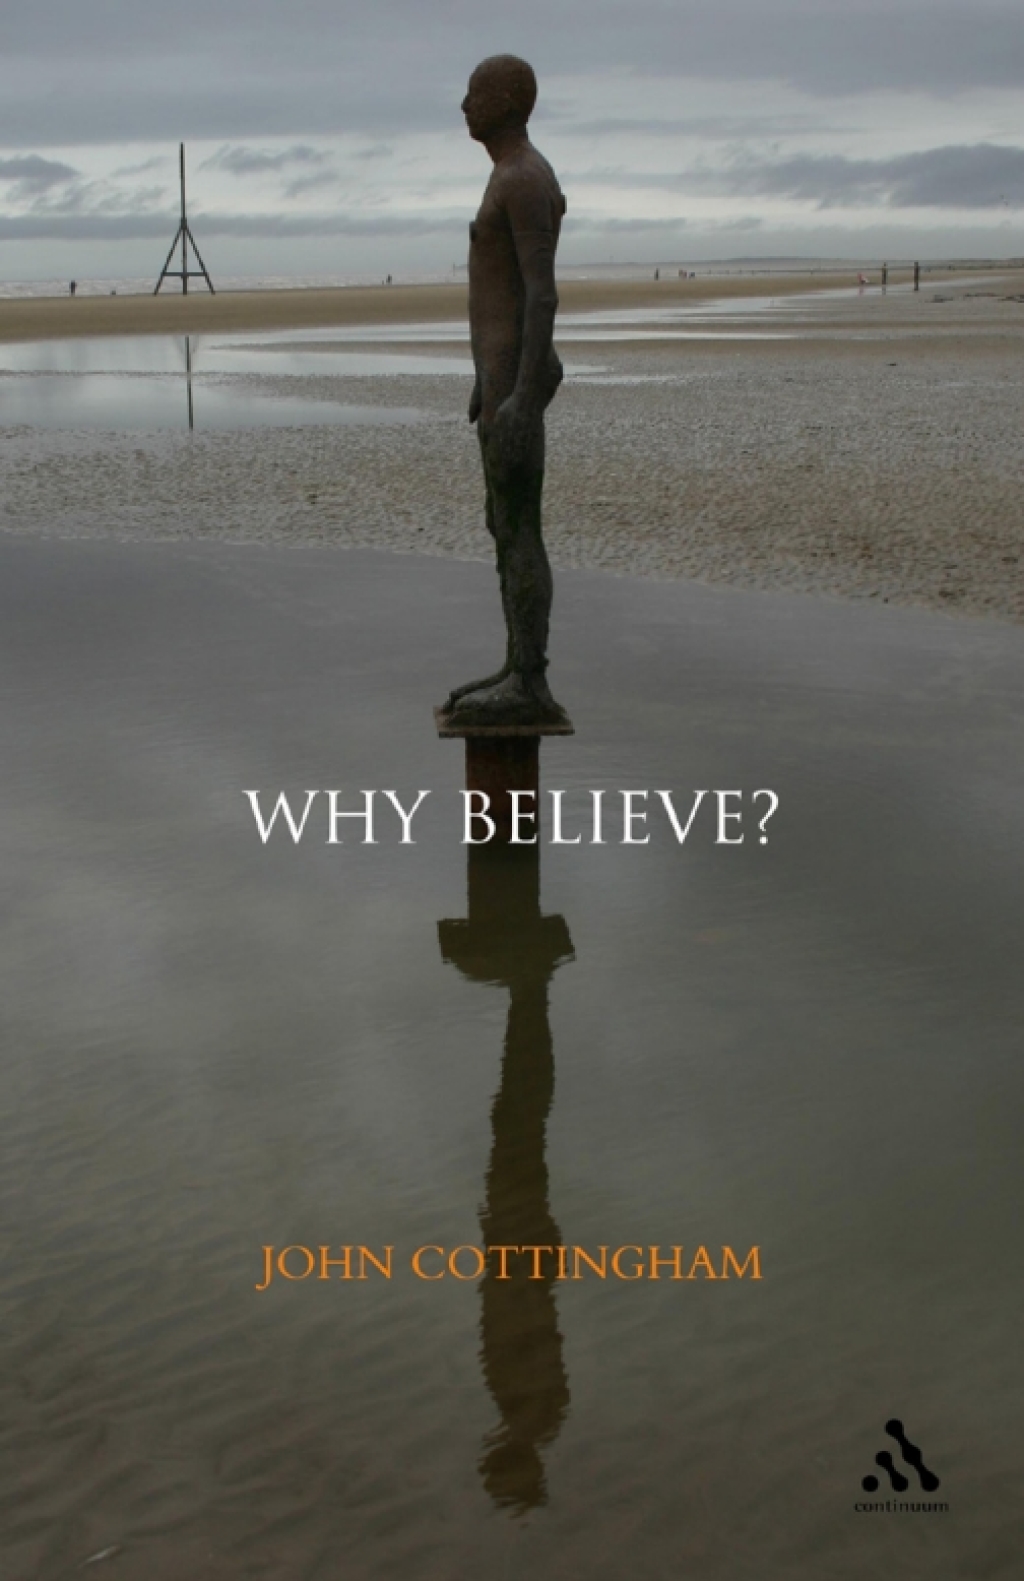 Why Believe? (eBook) - John Cottingham